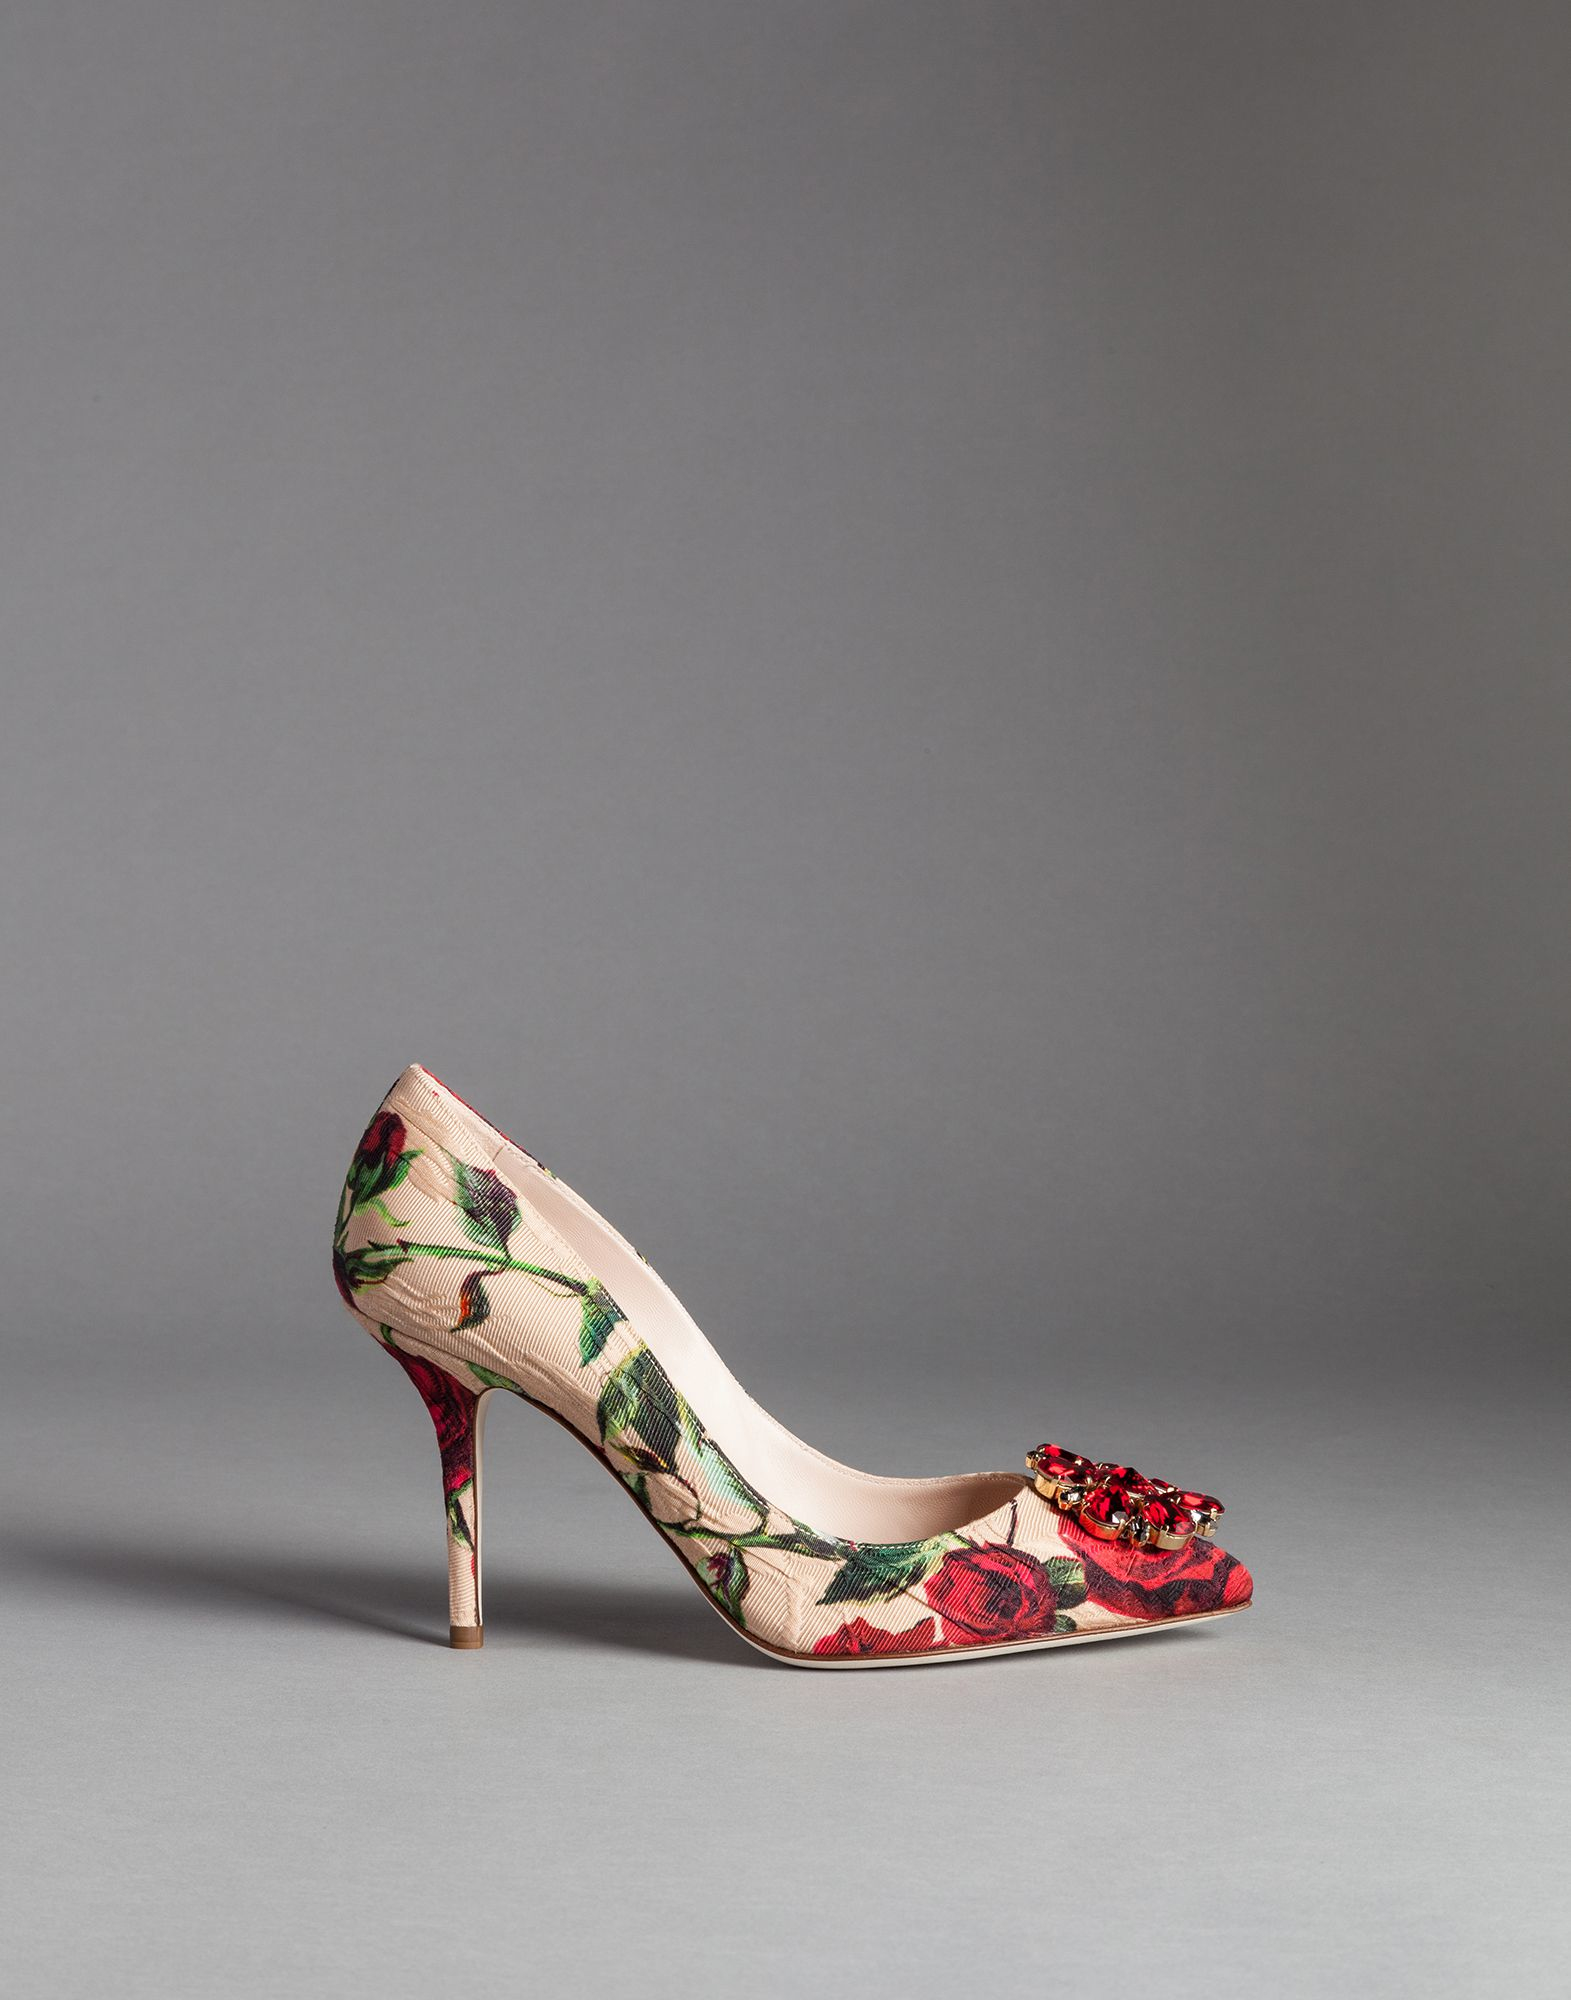 dolce gabbana rose shoes